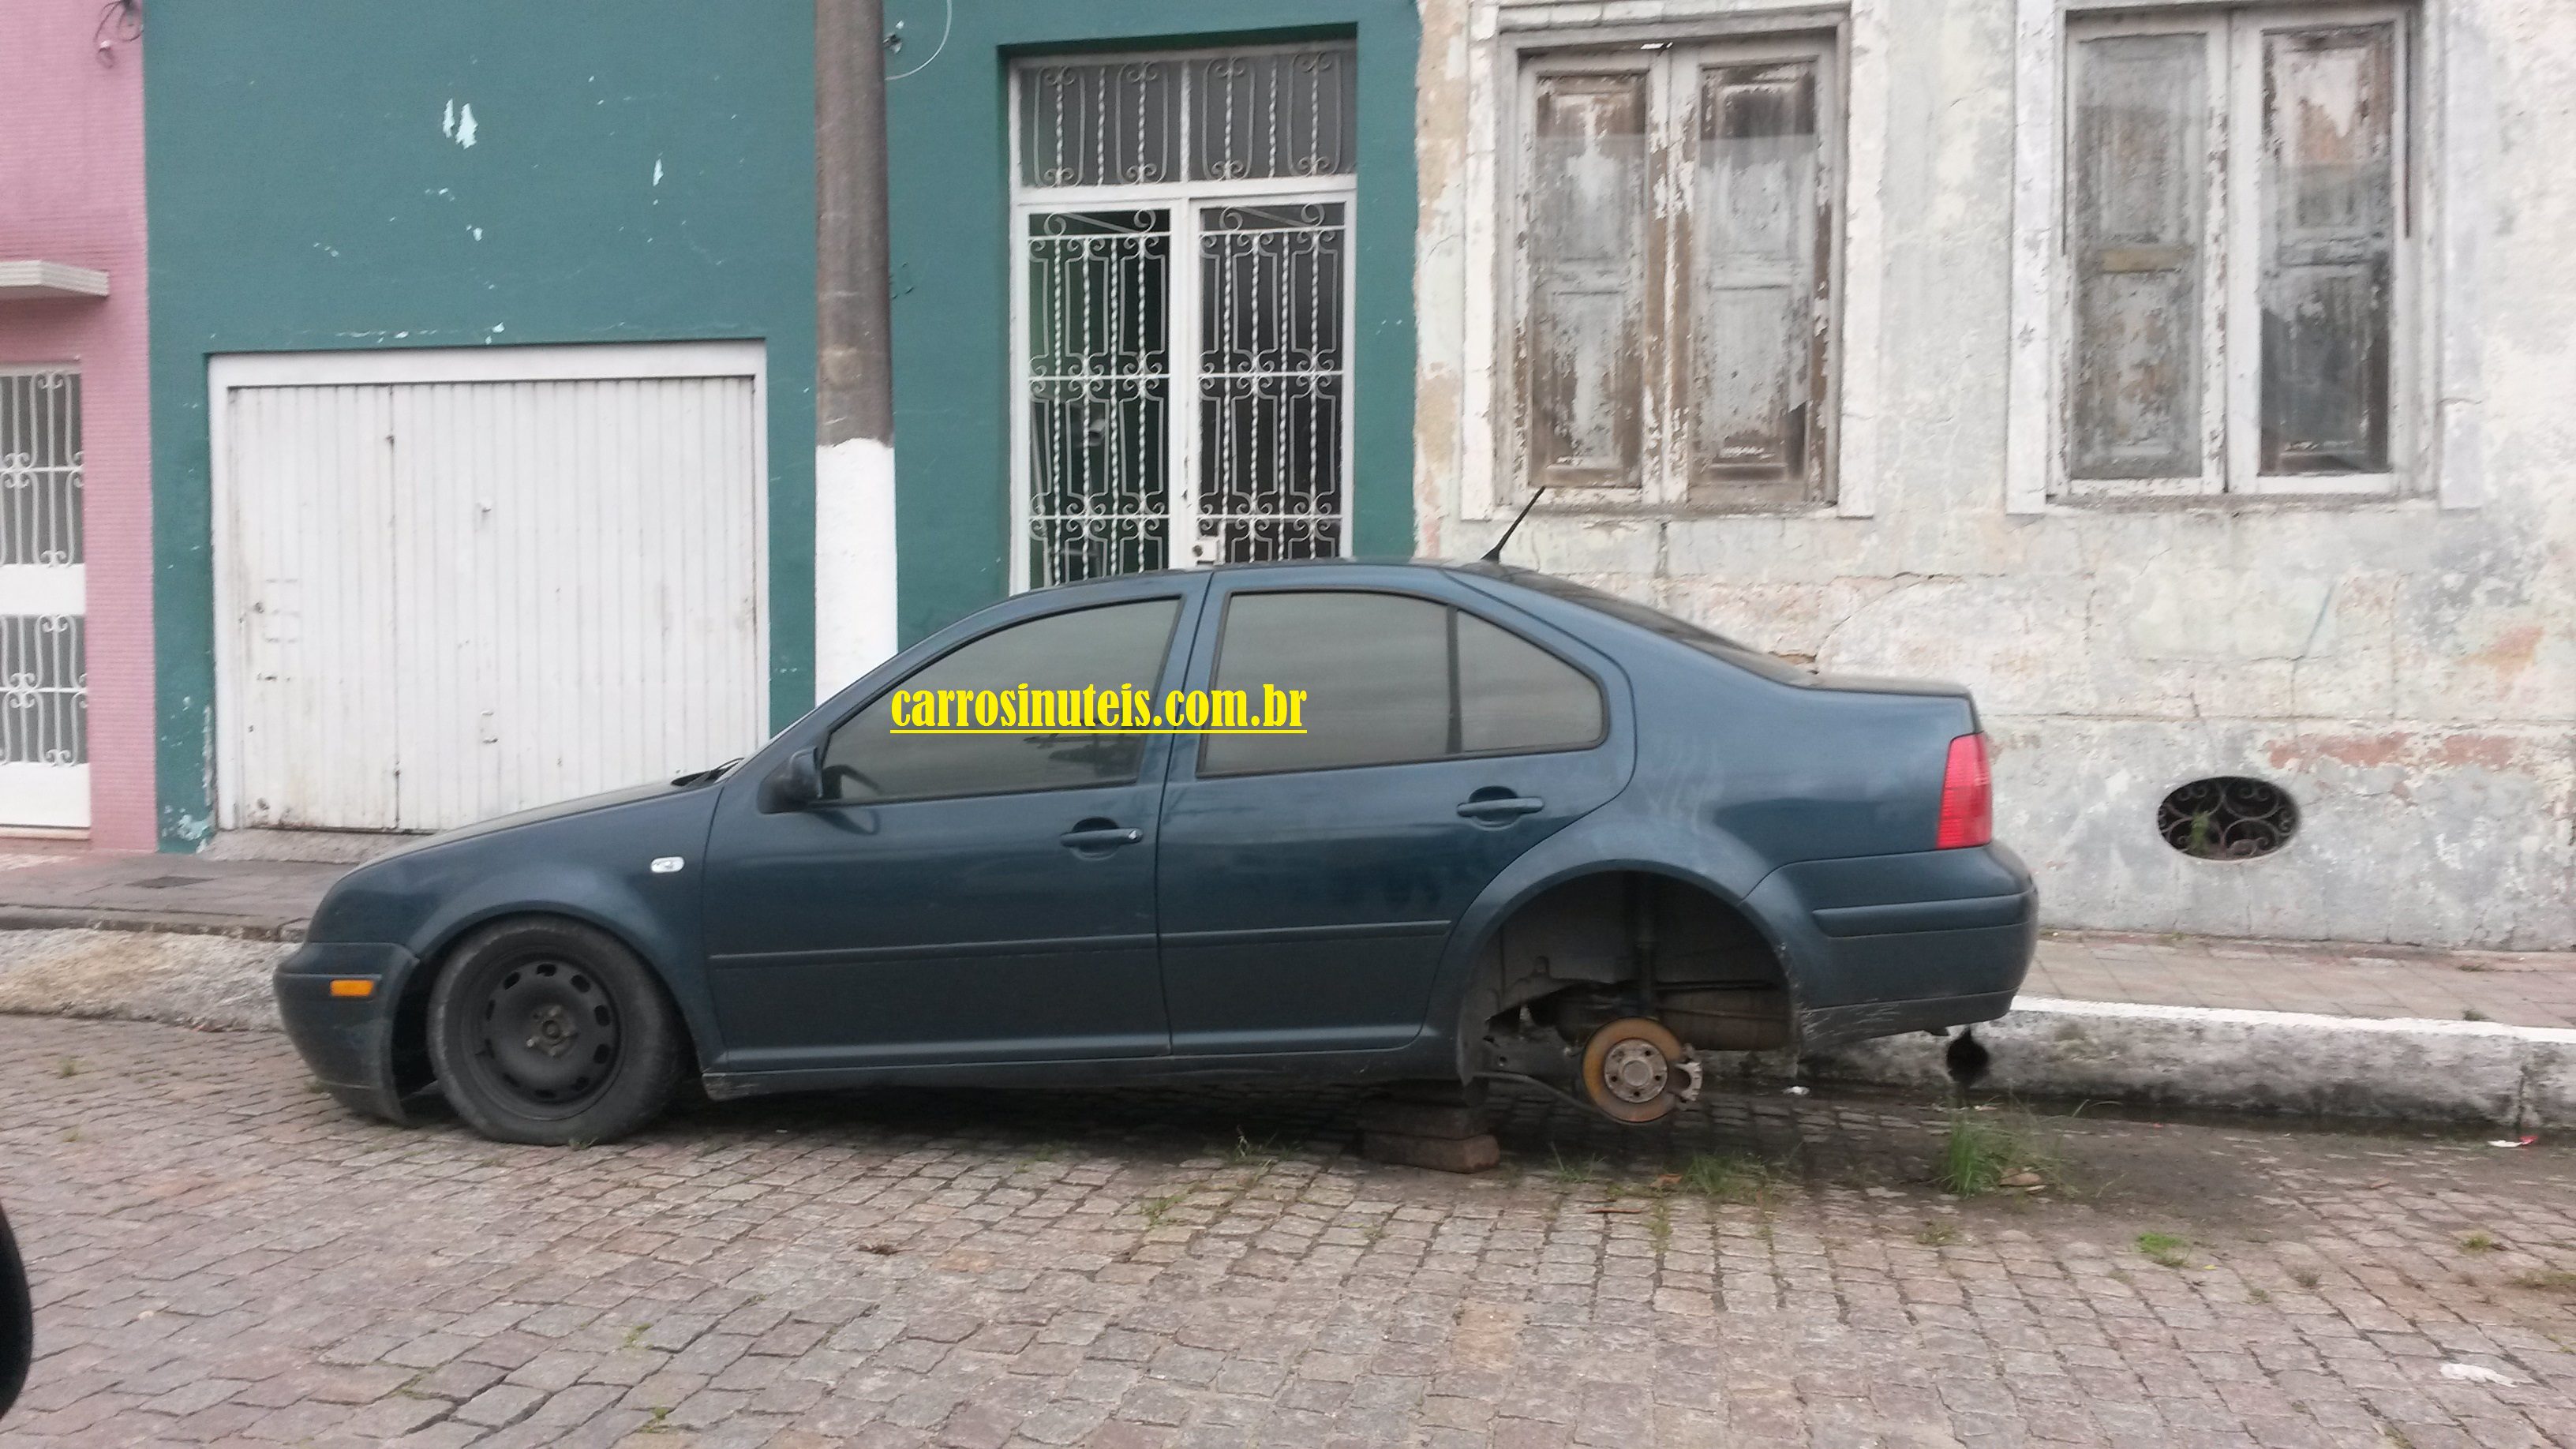 VW Bora, Pelotas, RS, Tiago